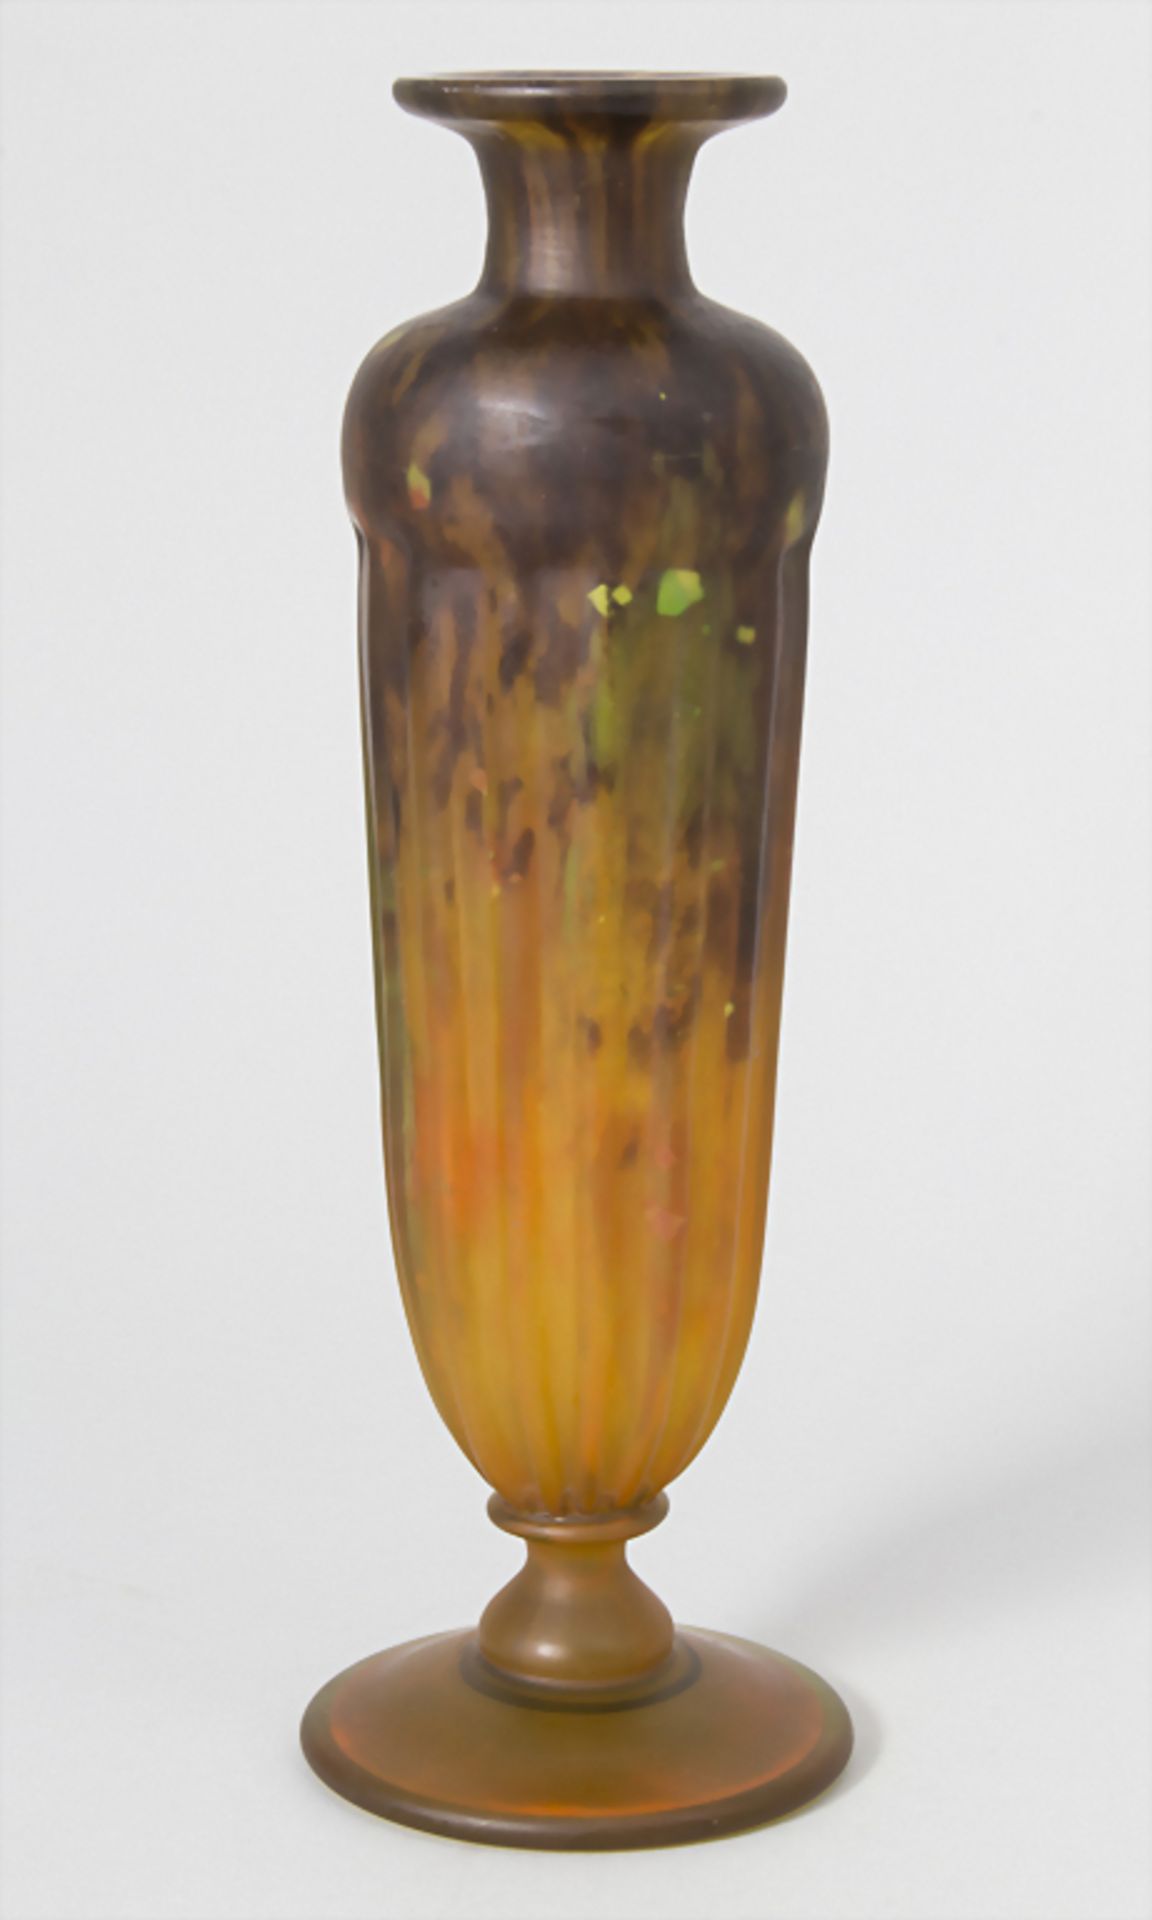 Jugendstil Vase / Art Nouveau glass vase, Daum Frères, Ecole de Nancy, Frankreich, um 1900< - Image 3 of 7